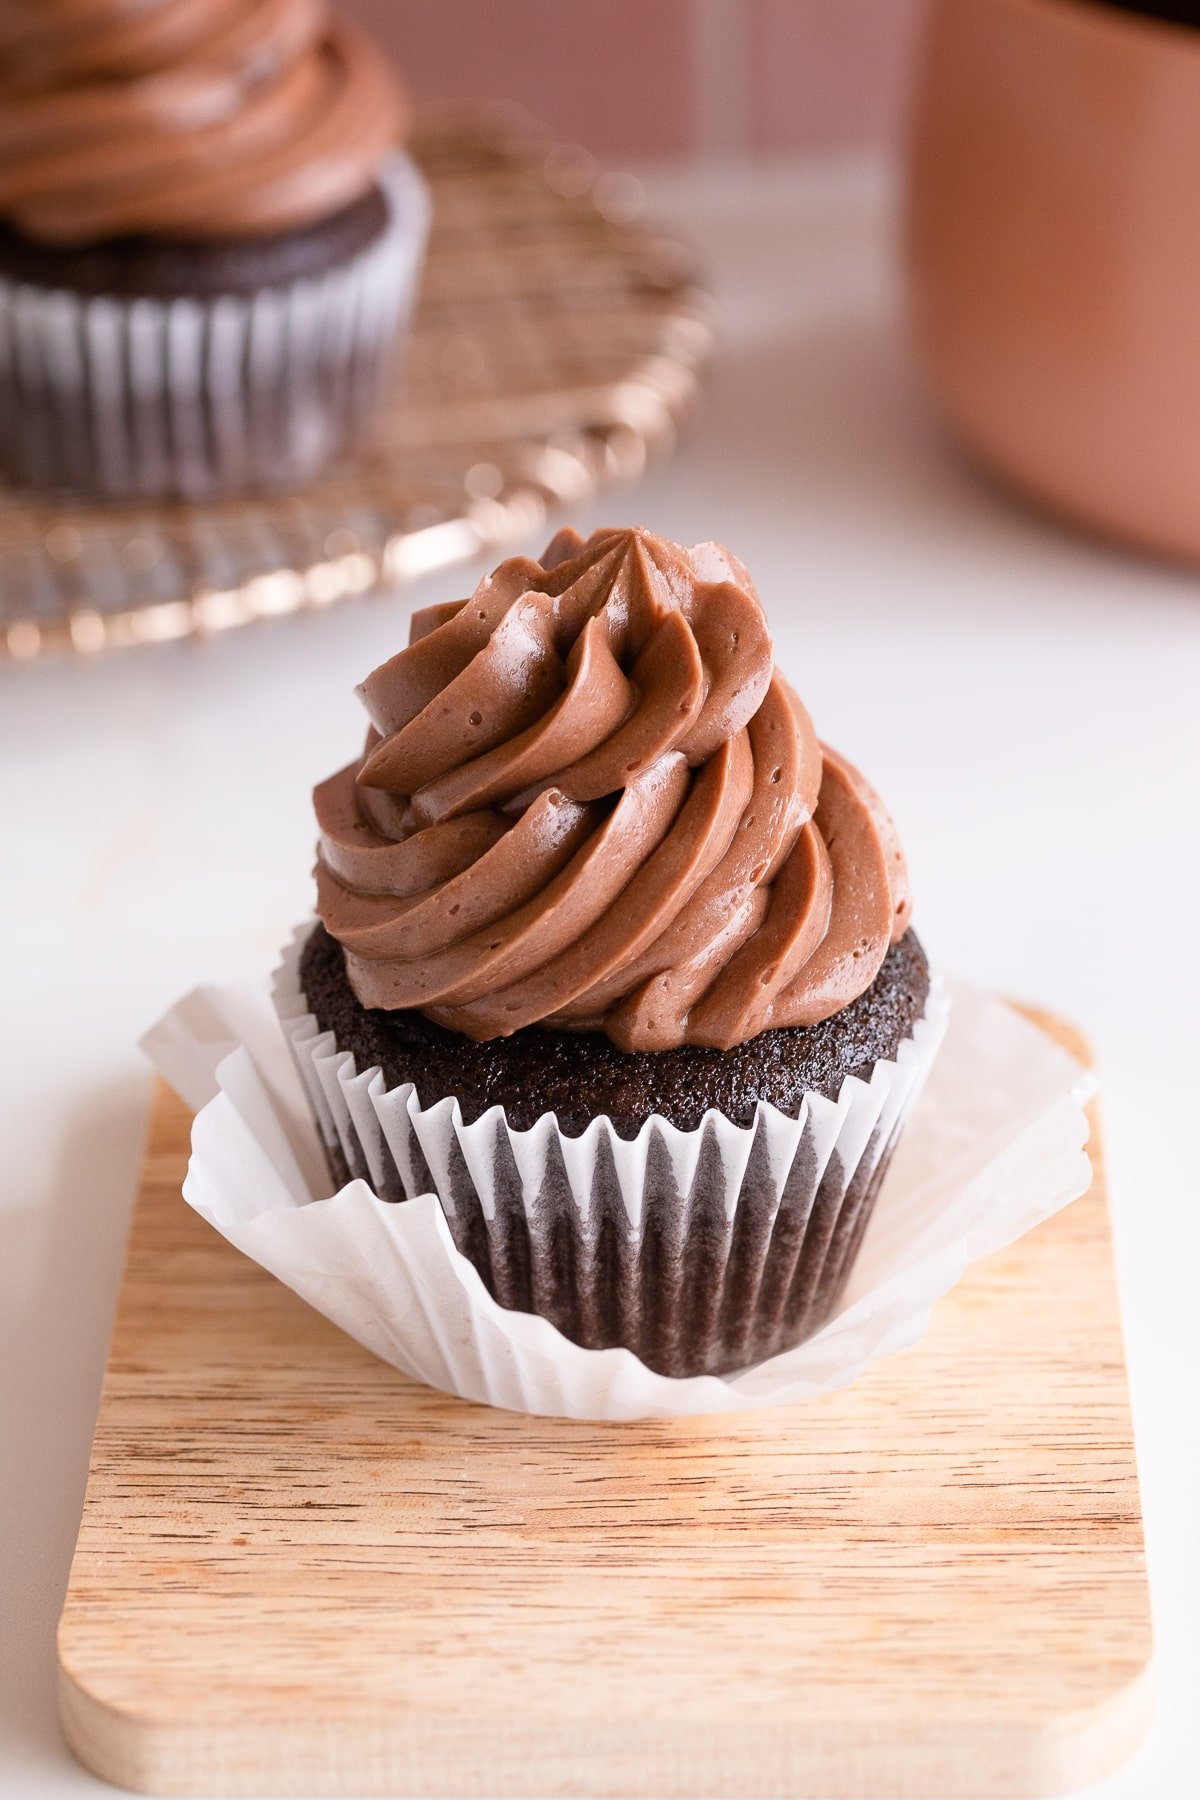 chocolate swiss meringue buttercream on cupcake.